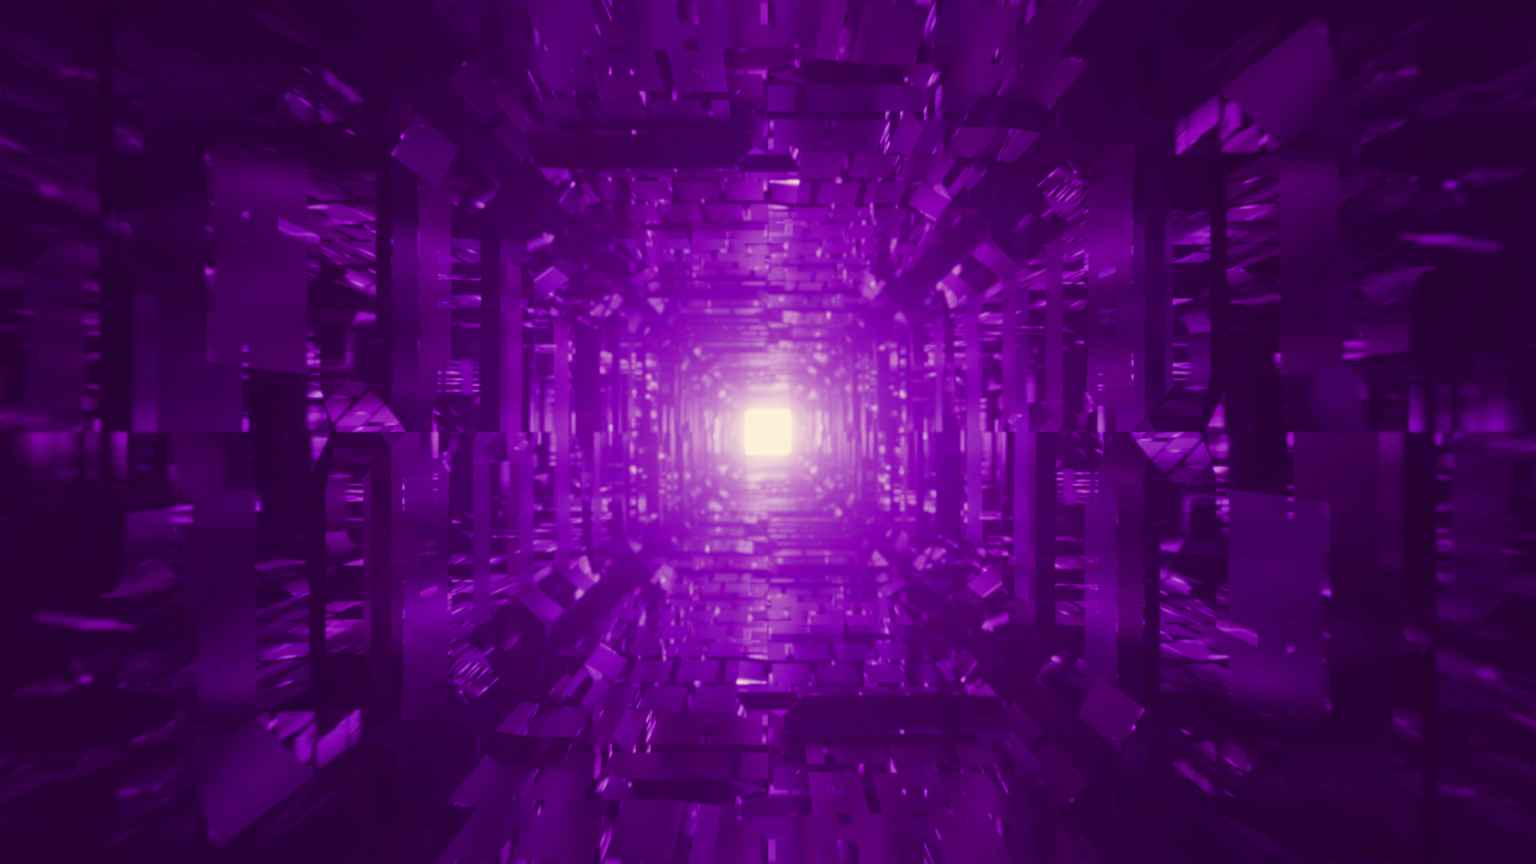 4K Flashing Purple Tunnel Motion Background || Free To Use Video || VFX 4K Screensaver